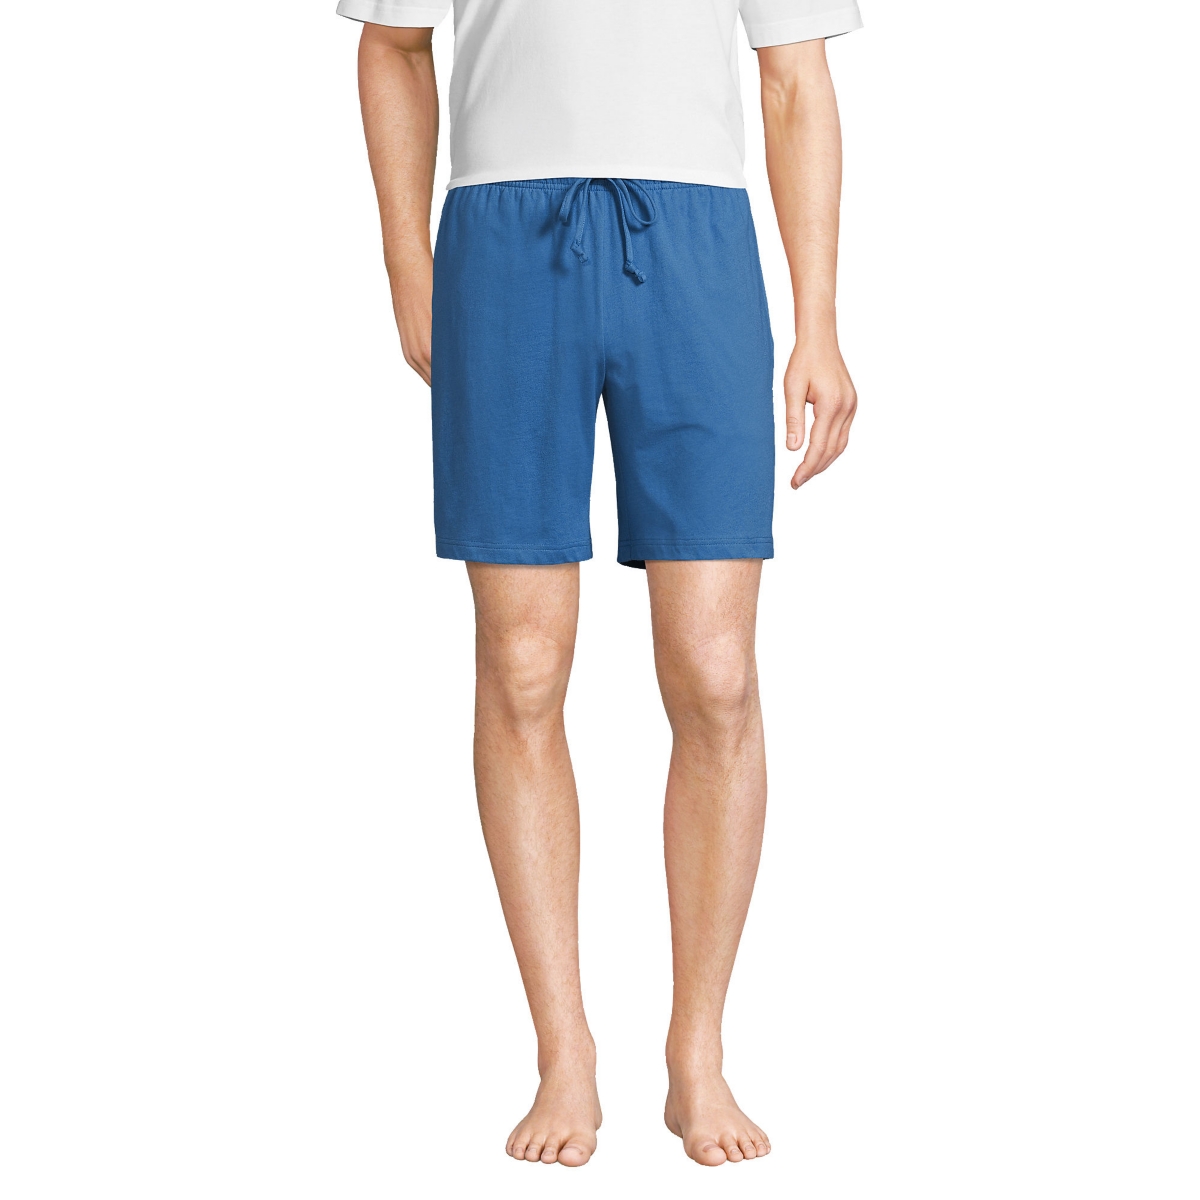 Men's Knit Jersey Pajama Shorts - Mariner blue